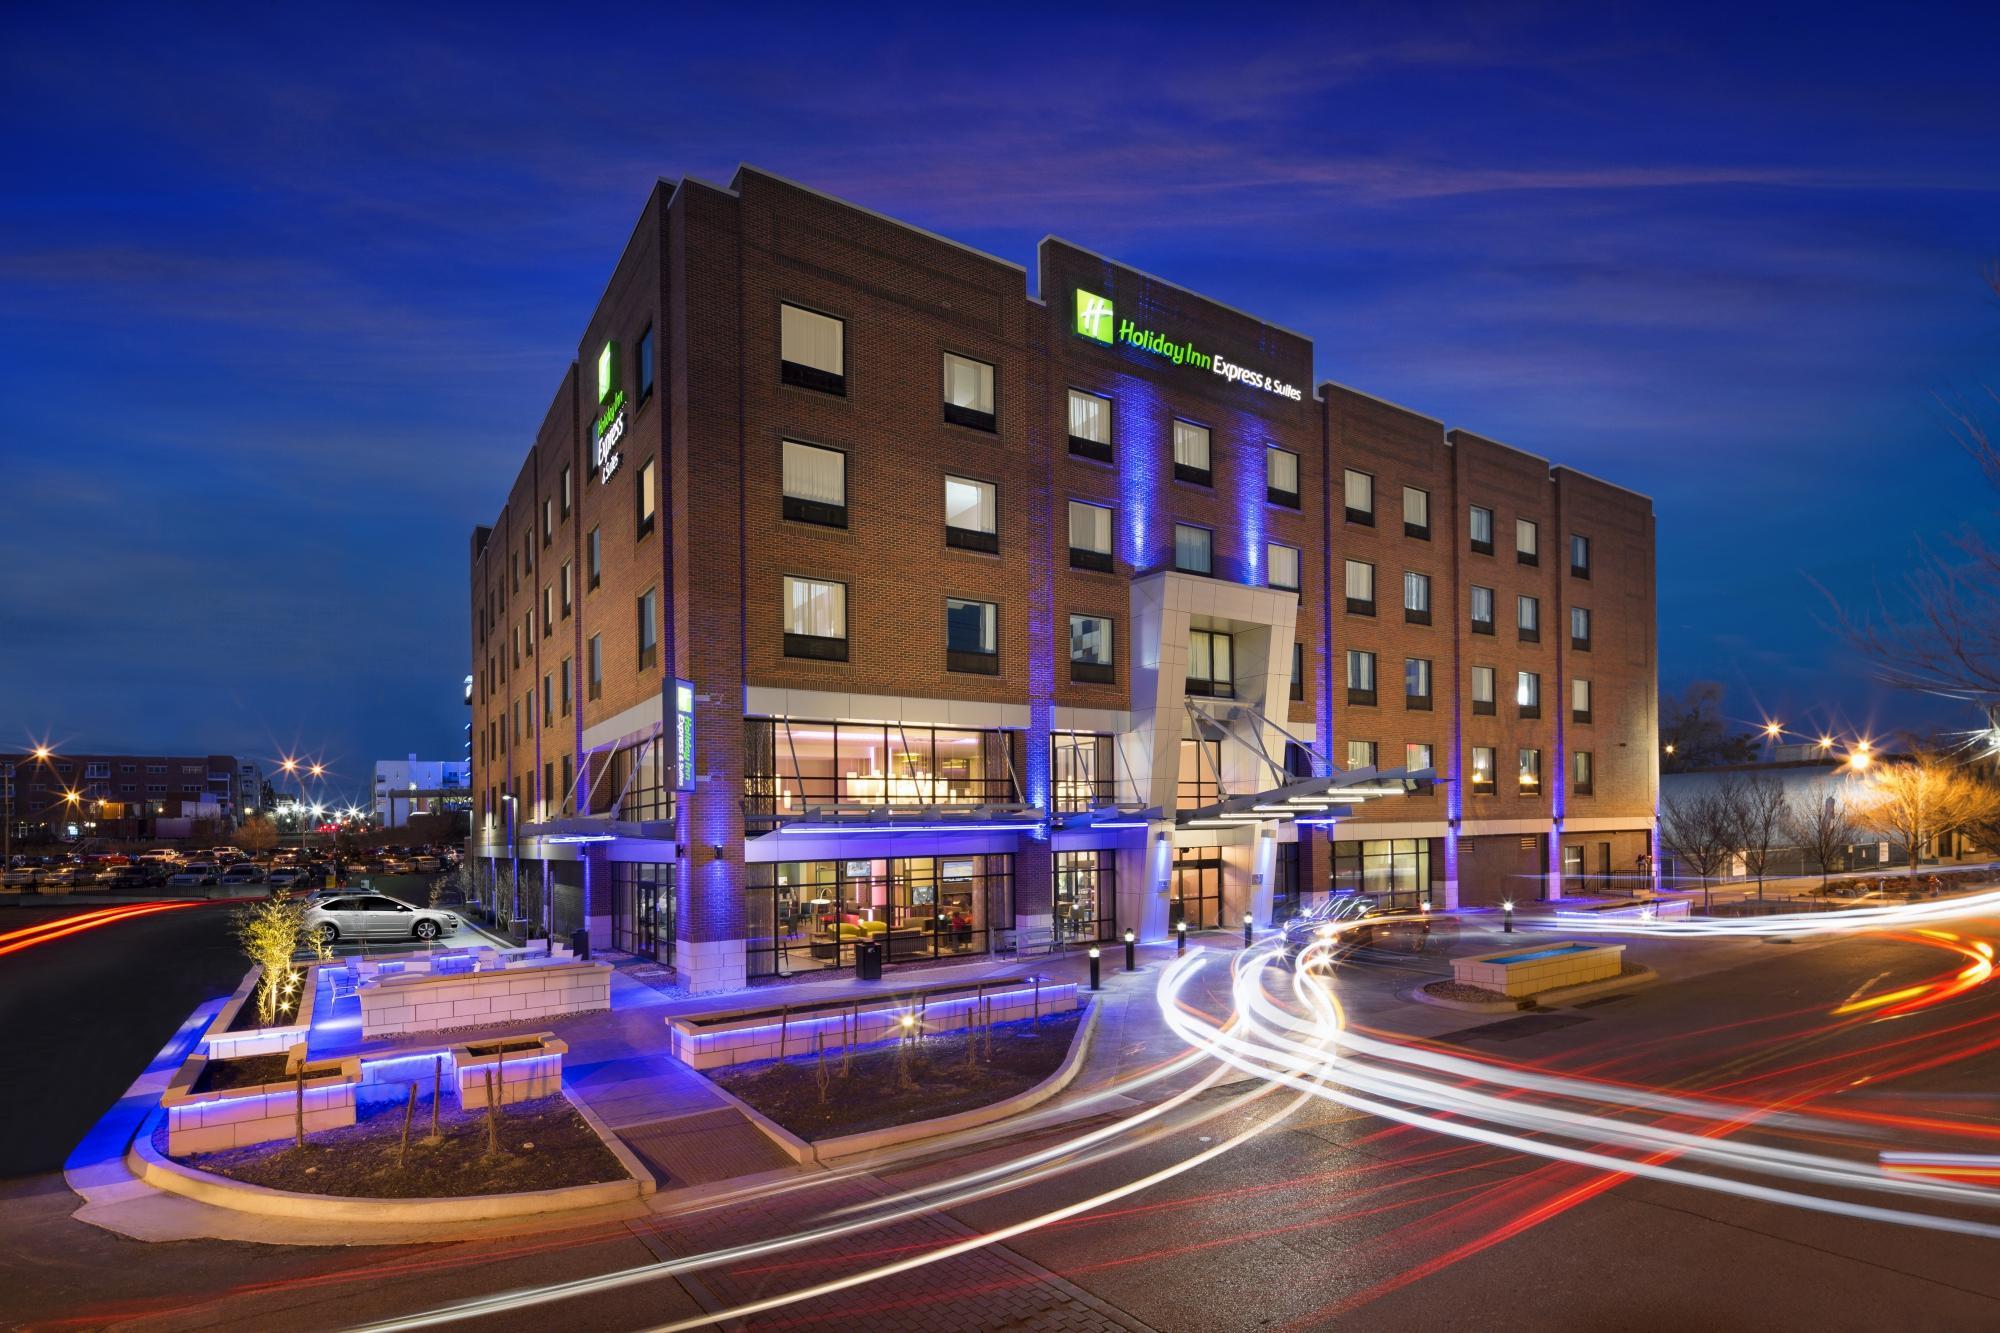 Photo of Holiday Inn Express & Suites Oklahoma City Downtown - Bricktown, Oklahoma City, OK